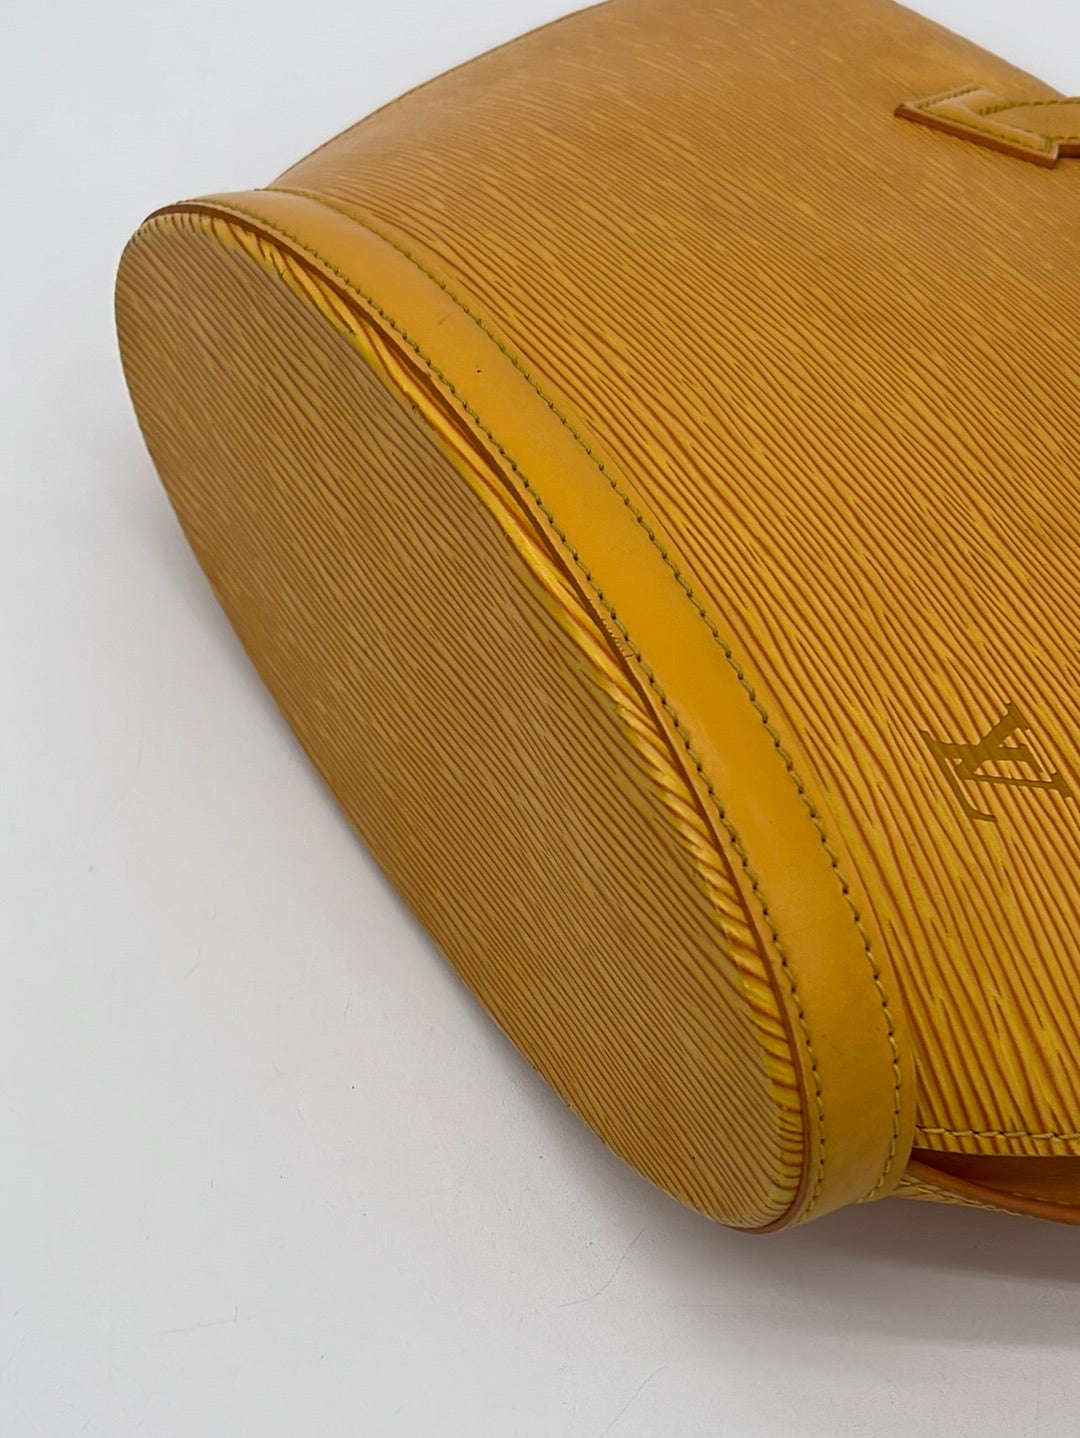 Preloved Louis Vuitton Yellow Epi Leather Saint Jacques PM Bag 2W63GH6 040324 P